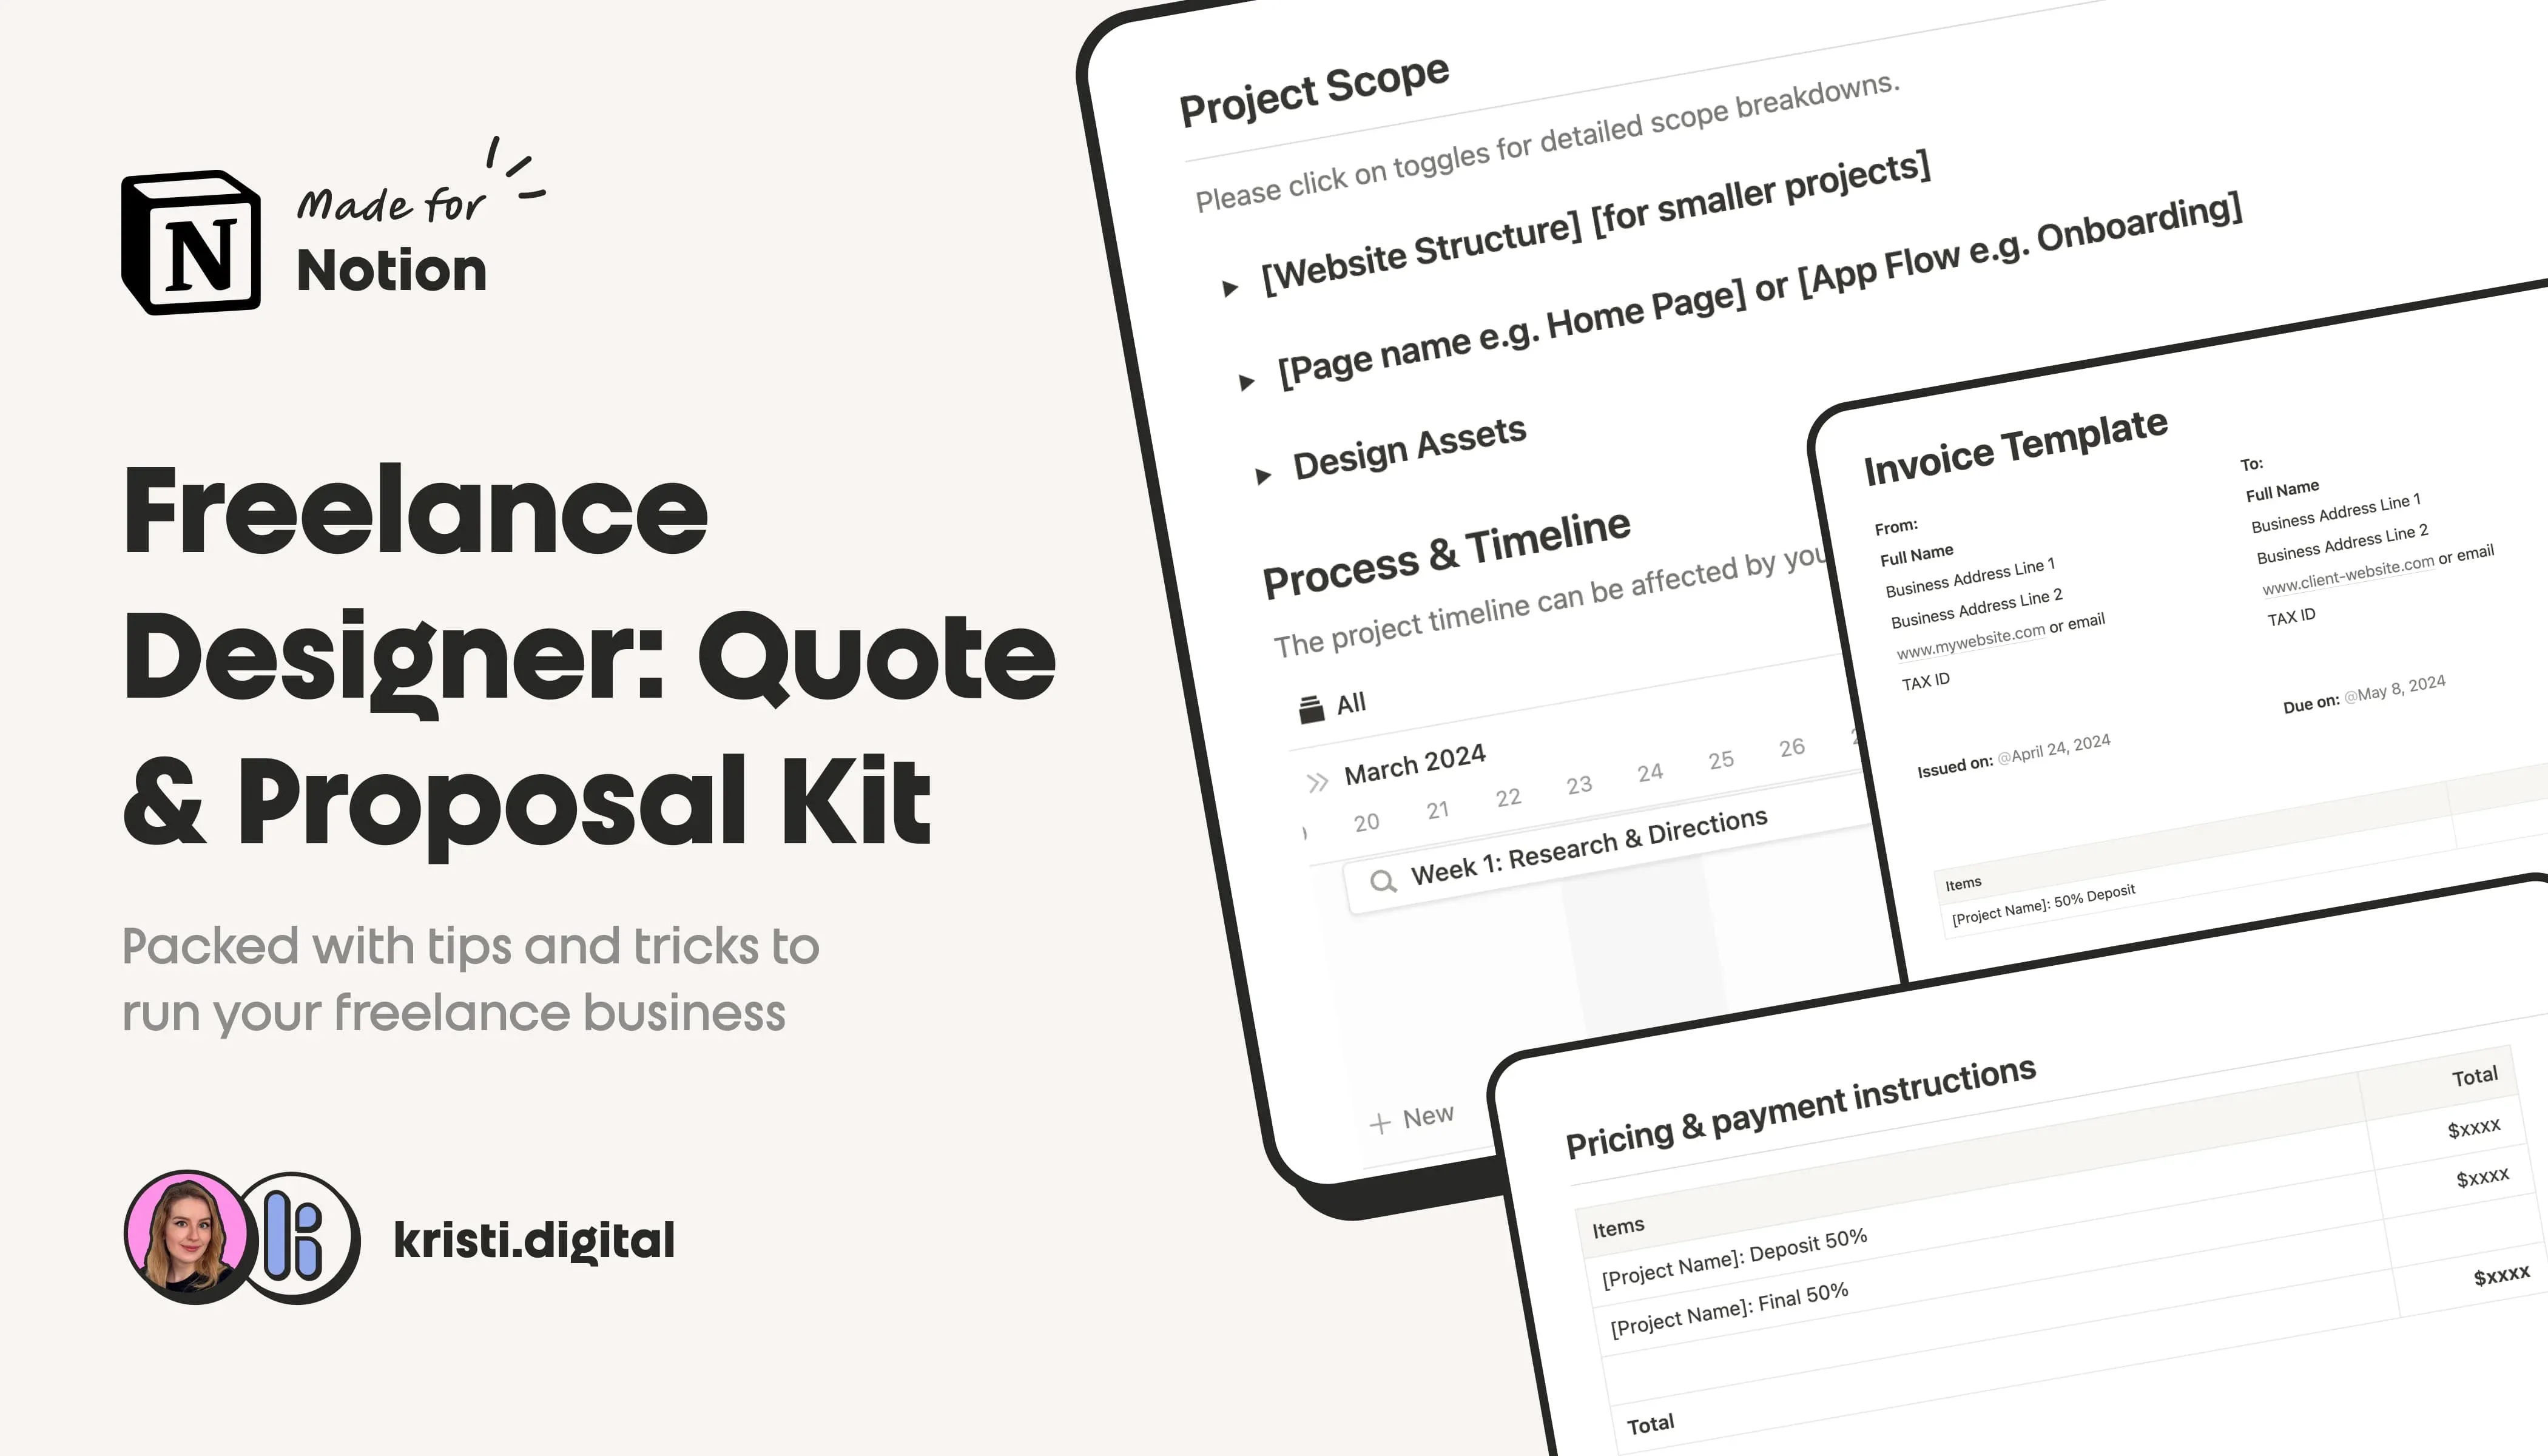 https://shop.kristi.digital/l/freelance-quote-proposal-kit